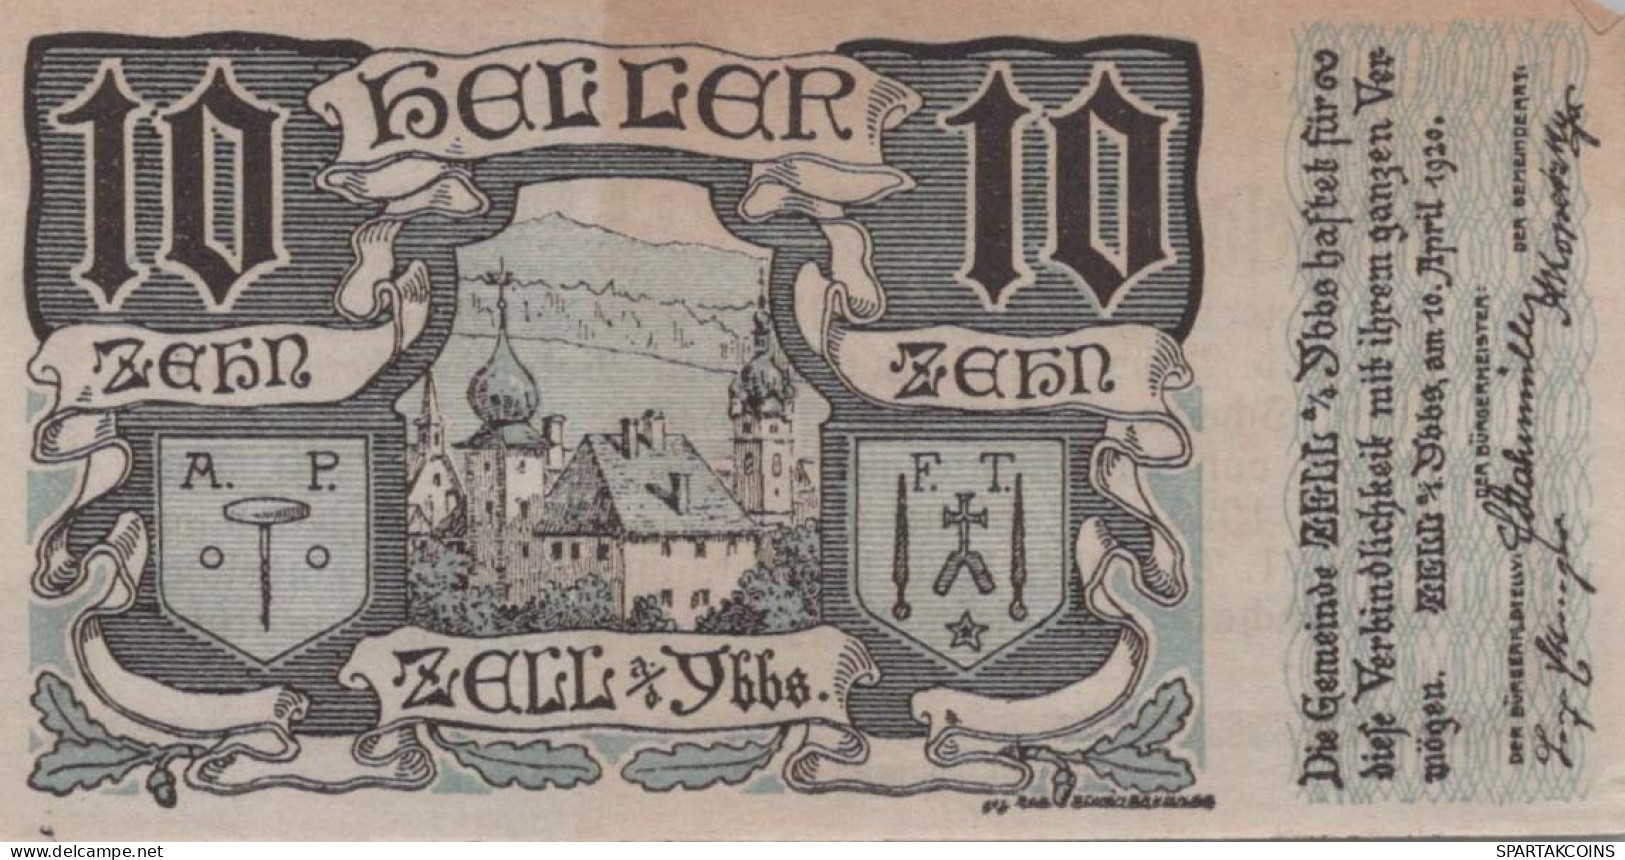 10 HELLER 1920 Stadt ZELL AN DER YBBS Niedrigeren Österreich Notgeld #PF481 - Lokale Ausgaben